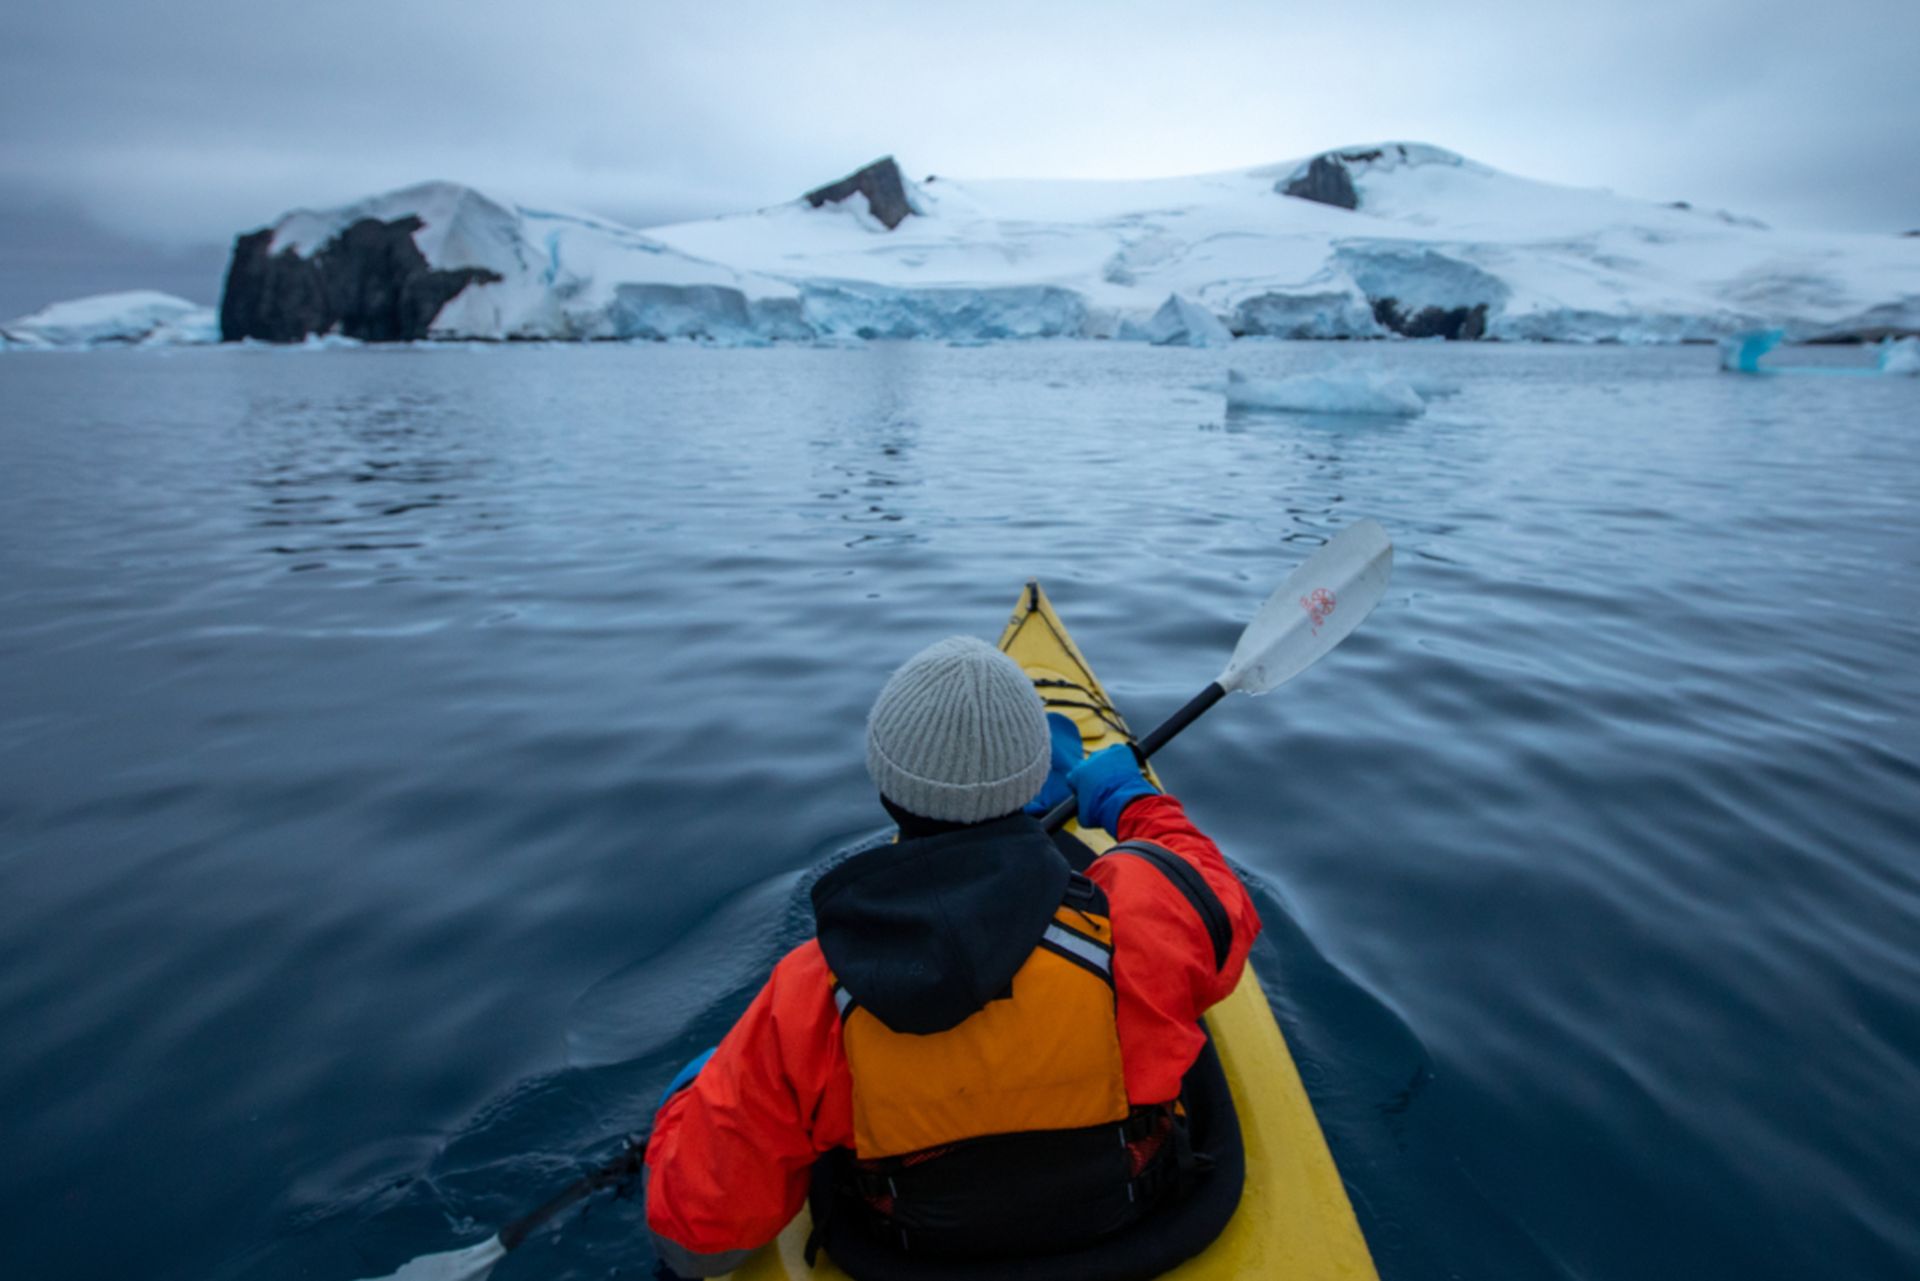 A'aifou Kayaking in Antarctica